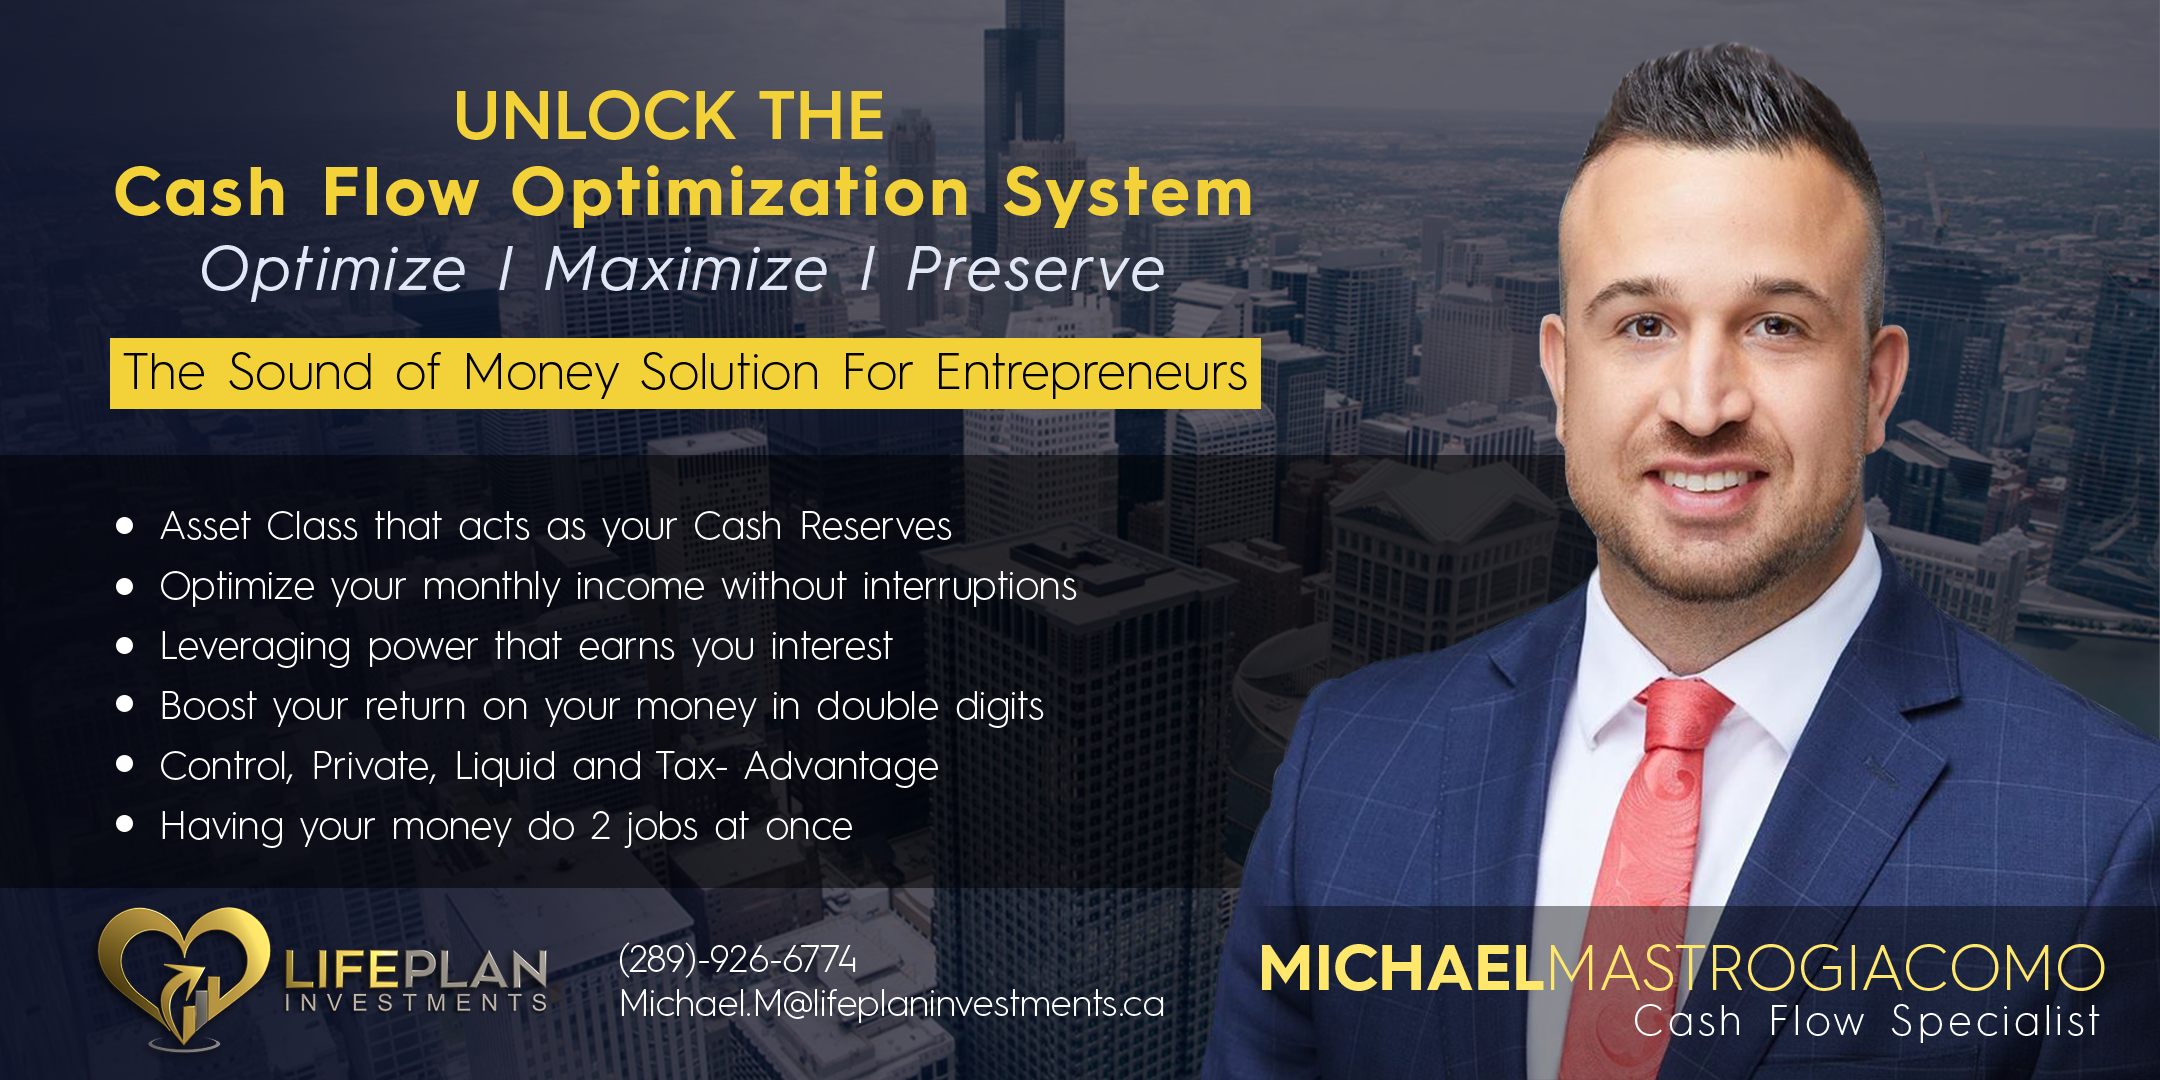 Unlock The Cash Flow Optimization System Seminar For Entrepreneurs